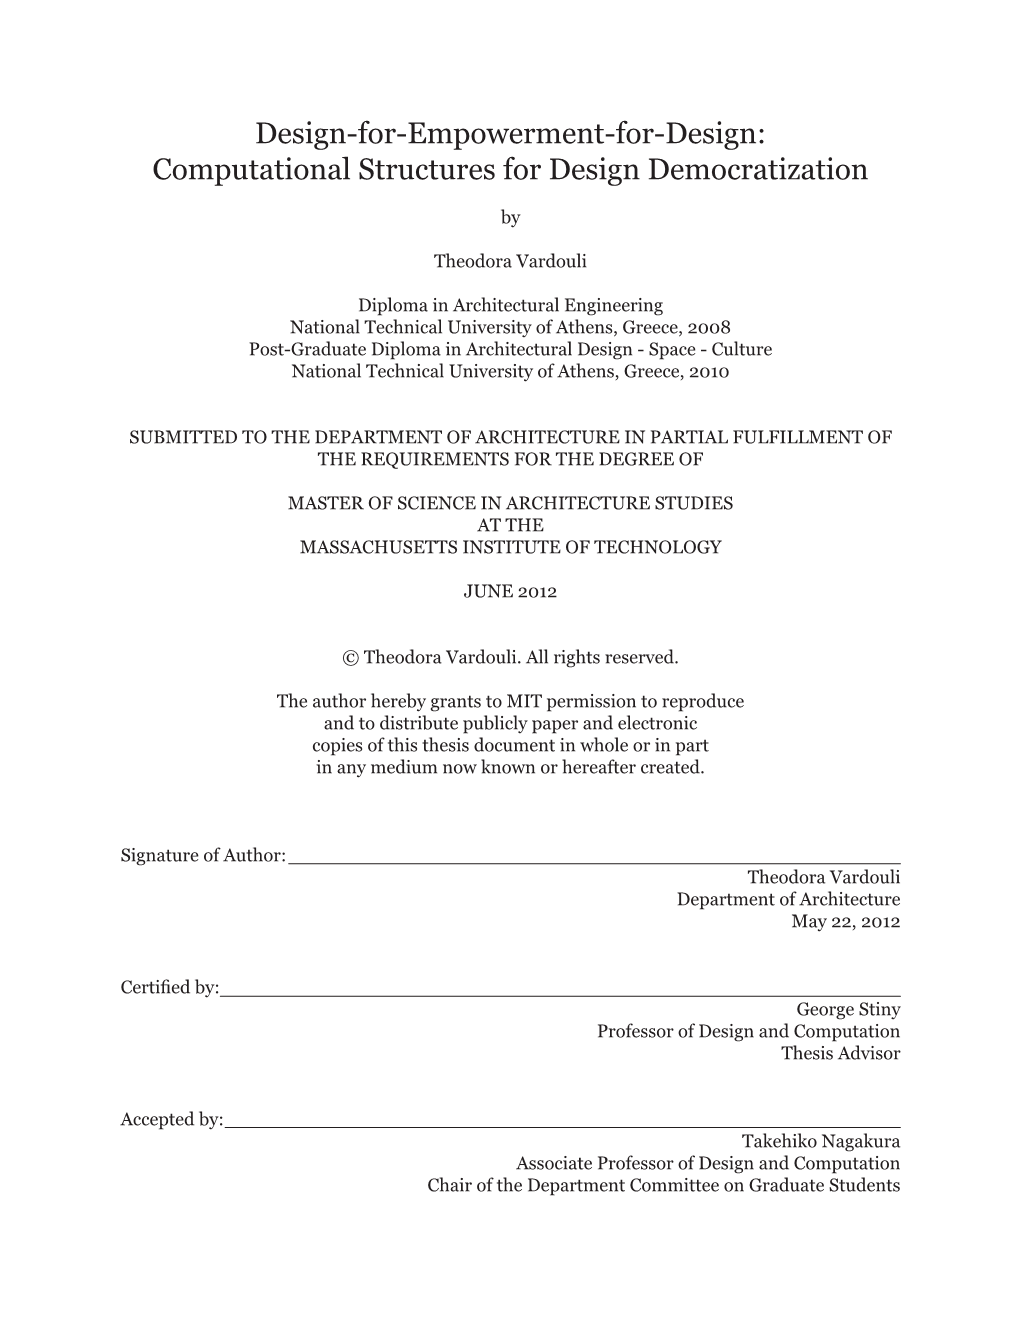 Computational Structures for Design Democratization